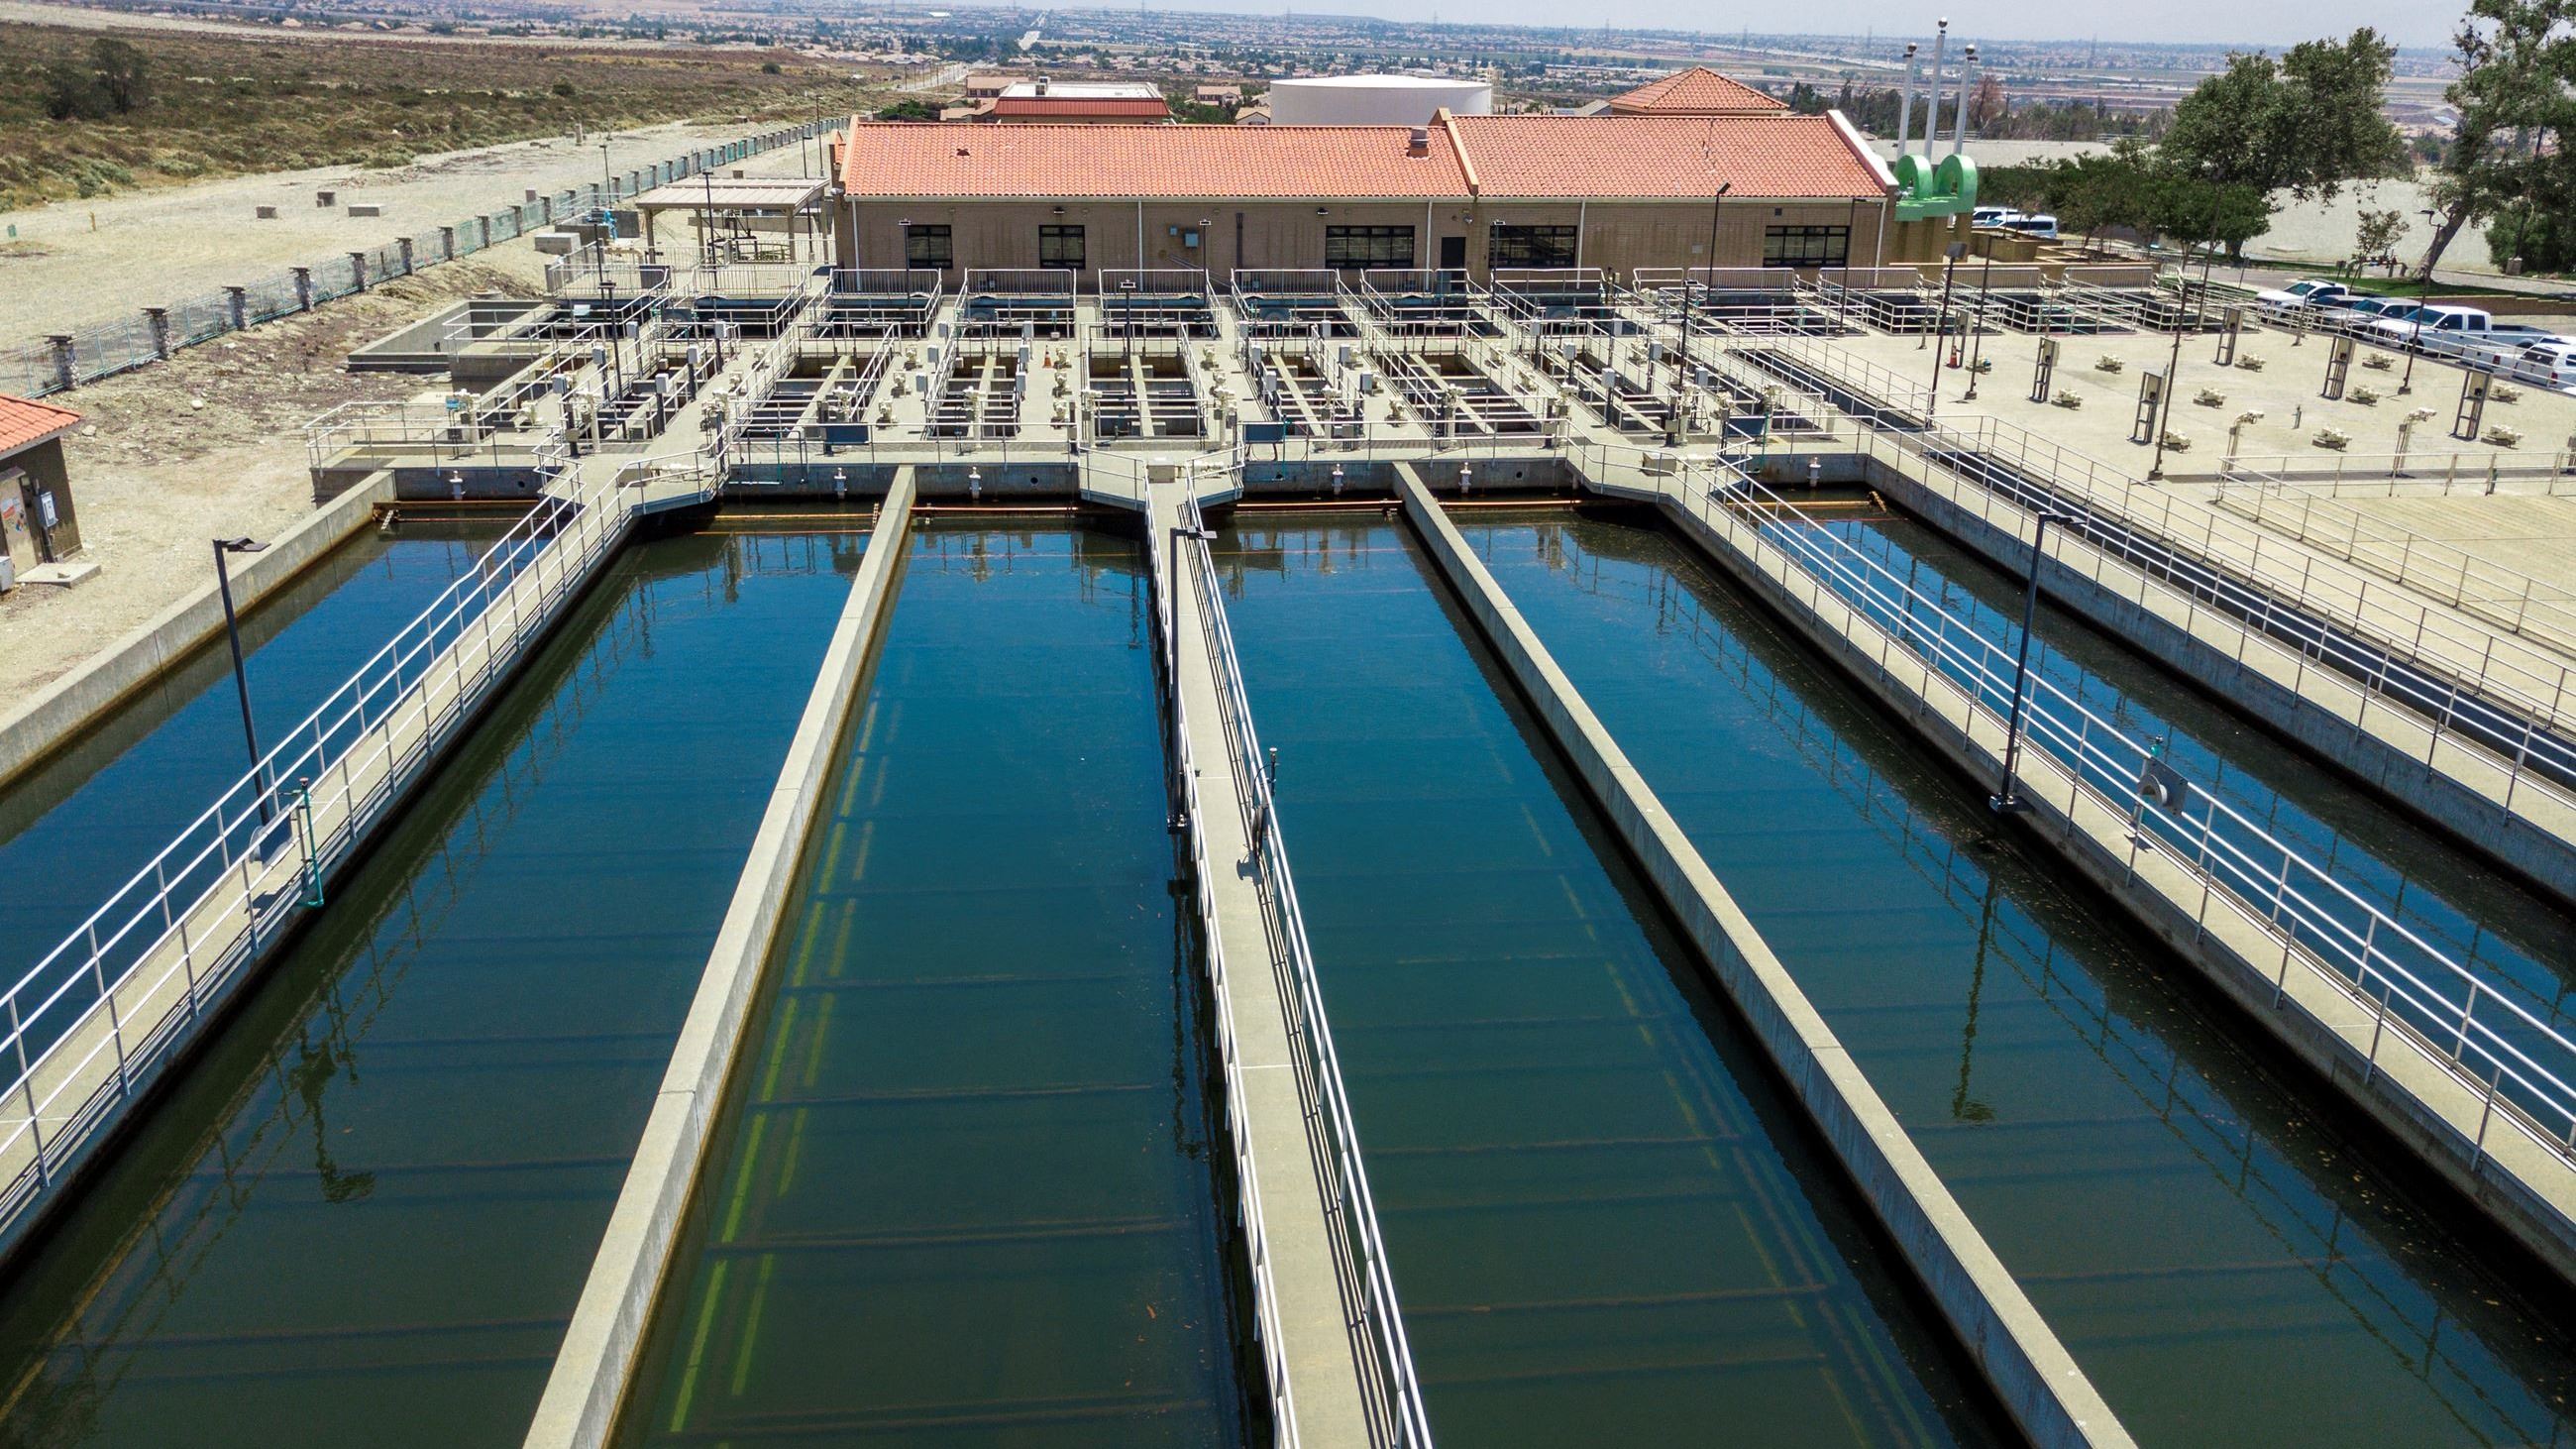 water treatment plant site visit report